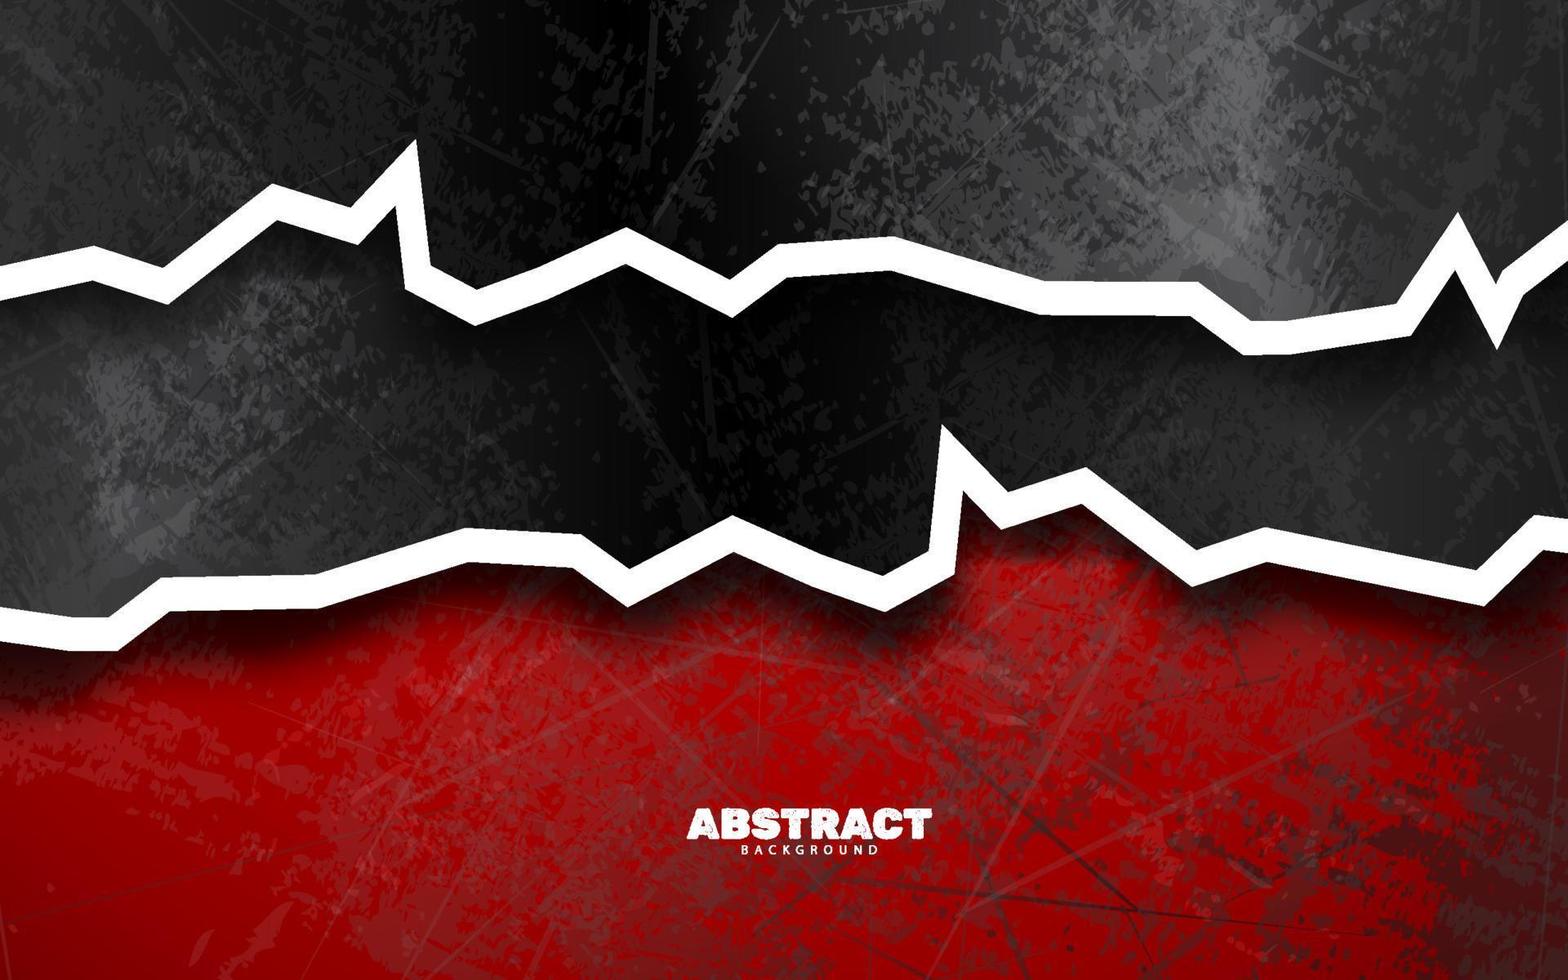 gescheurd papier abstract grunge structuur zwart en rood kleuren achtergrond vector